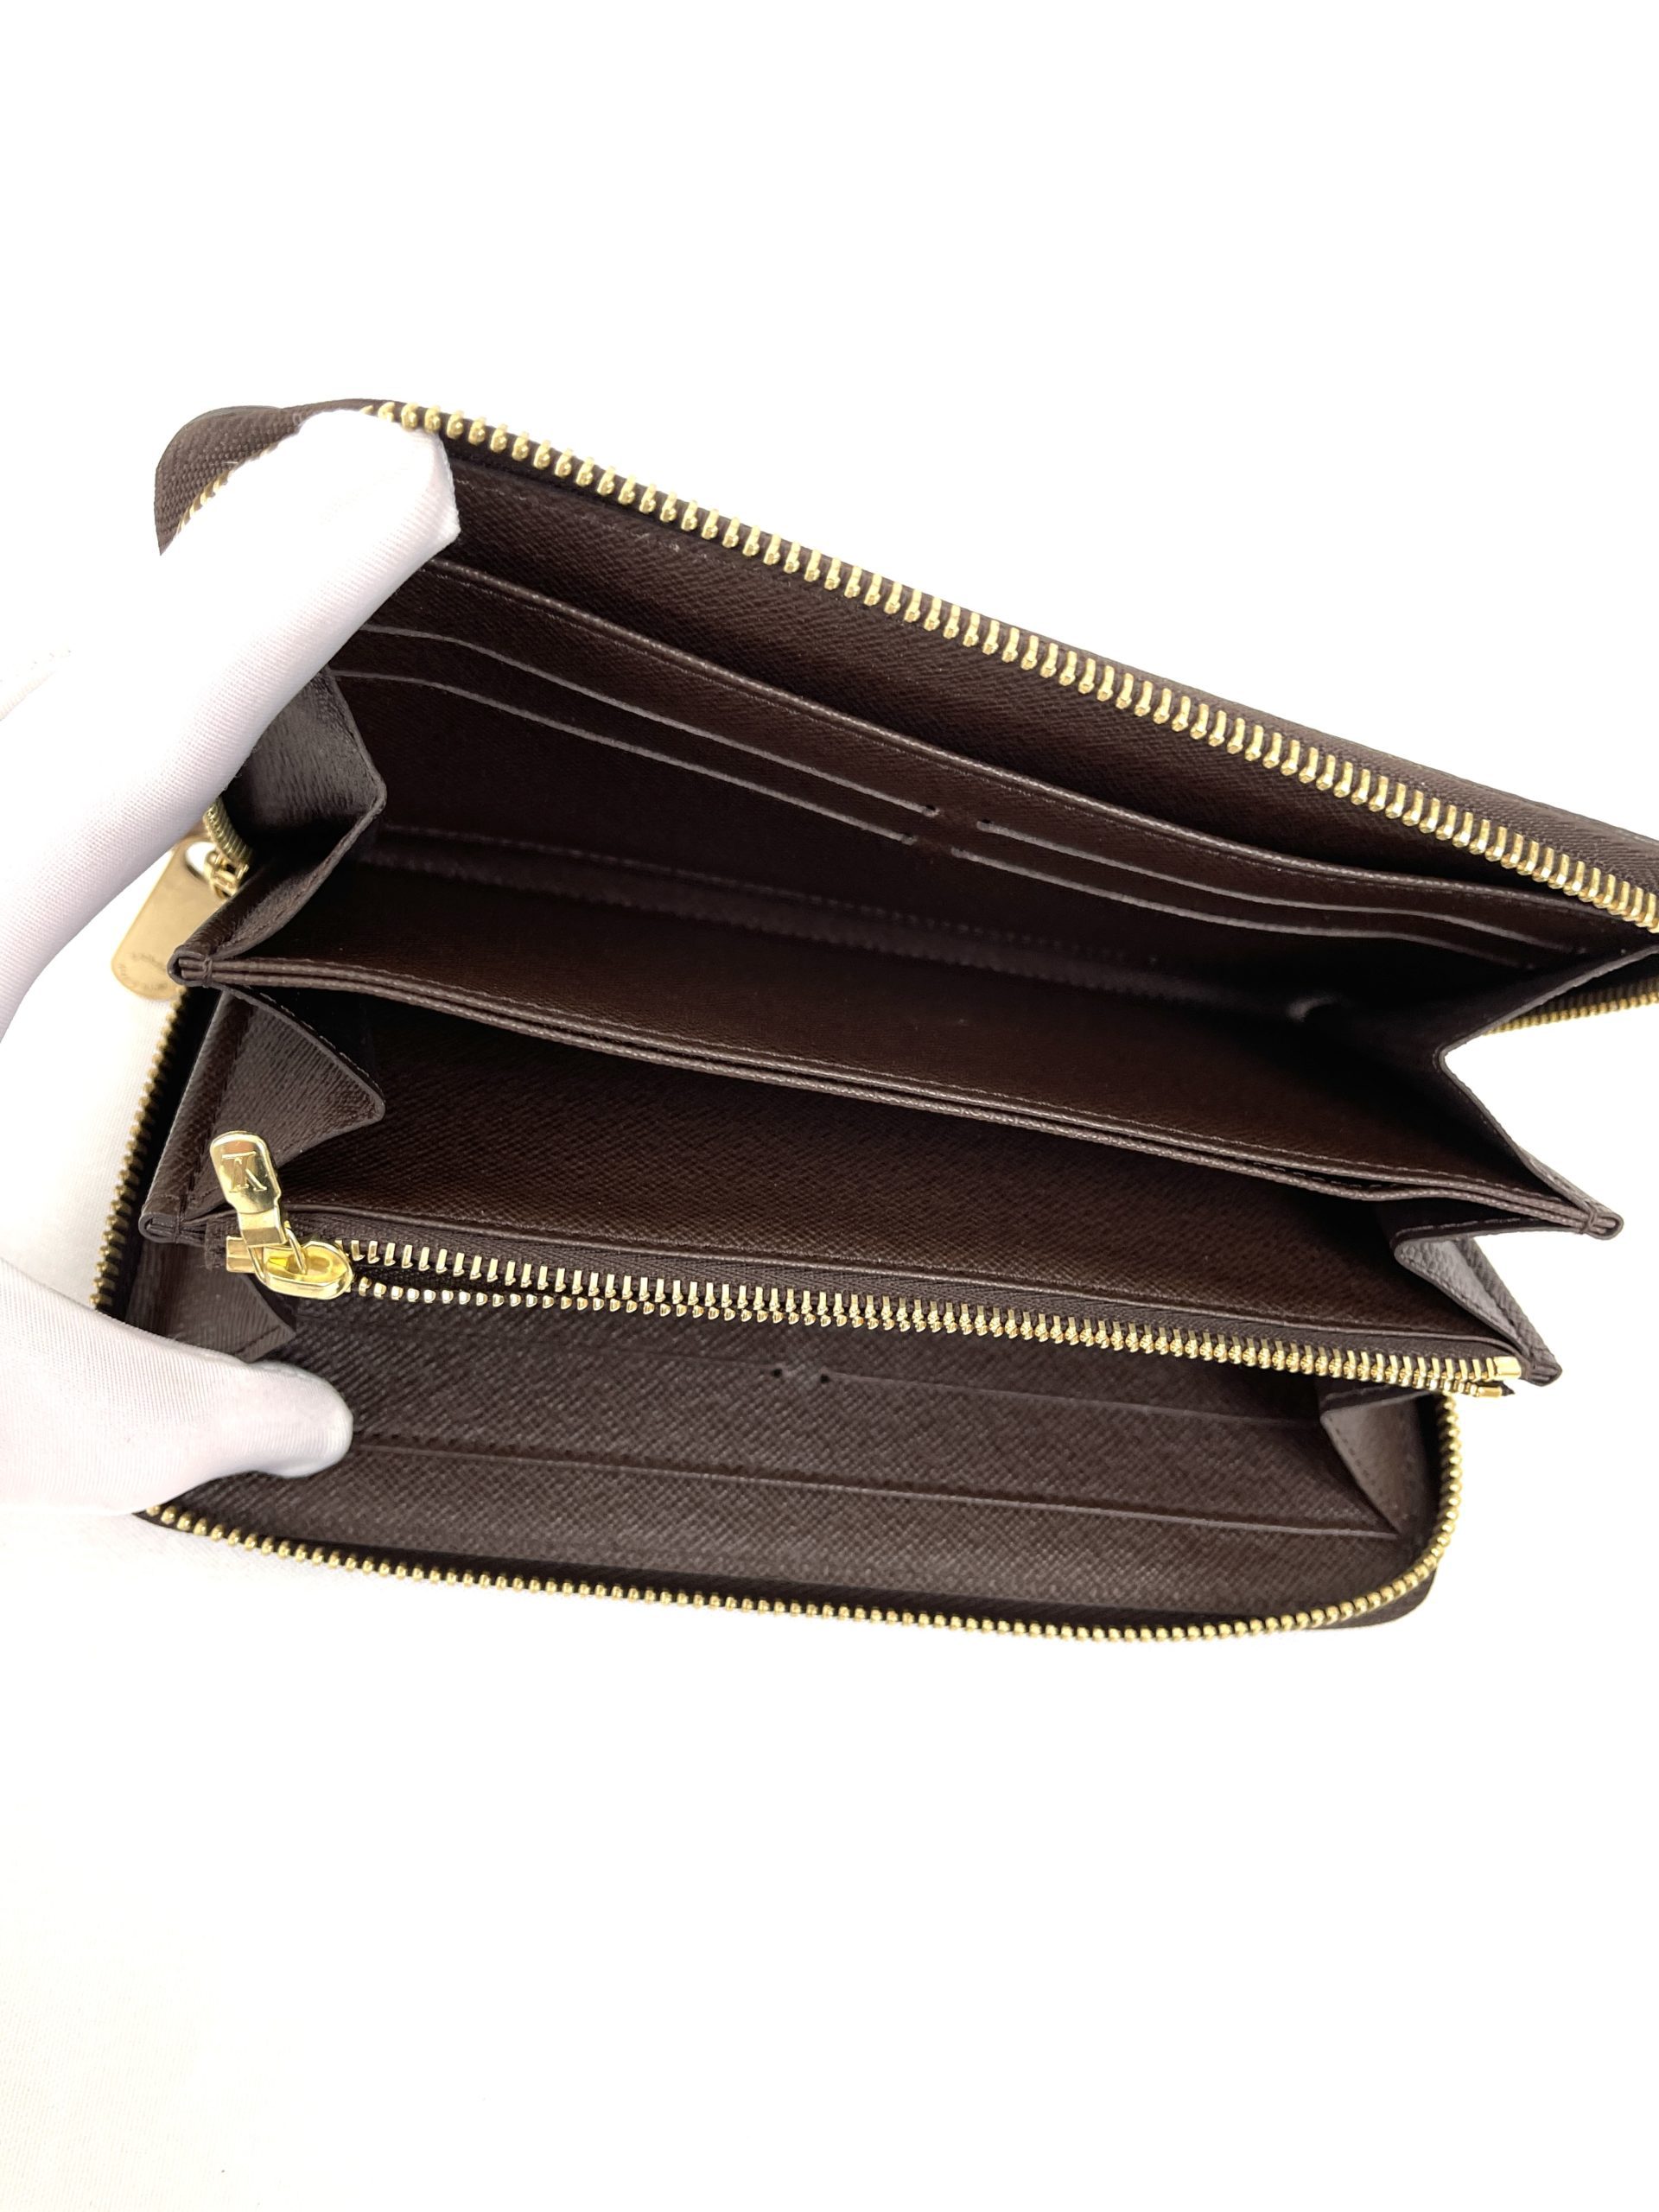 Louis Vuitton Zippy Wallet Pompon Pivone - A World Of Goods For